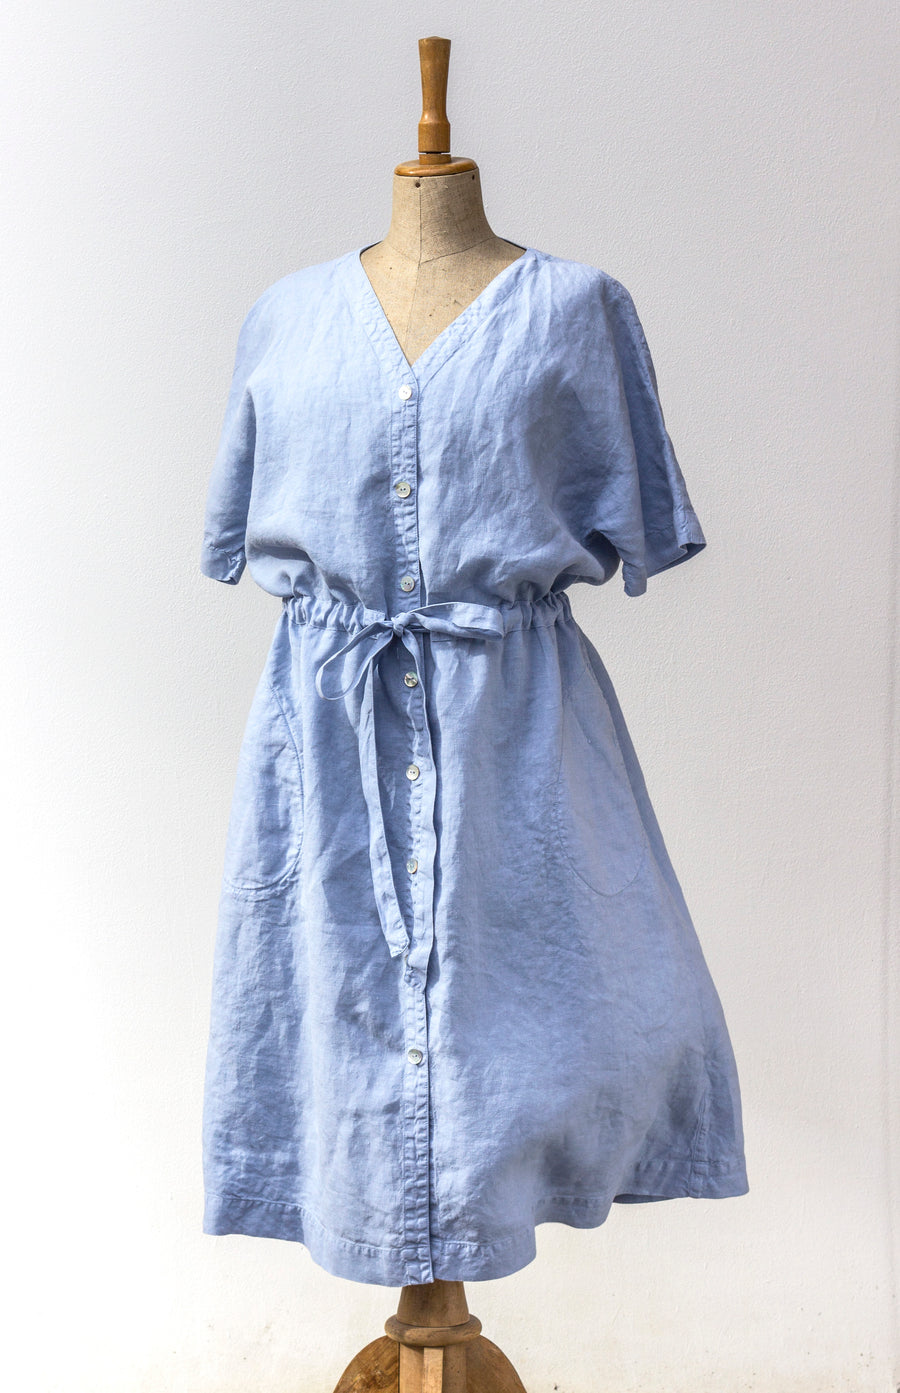 Shift dress in Kentucky Blue shade / PREORDER